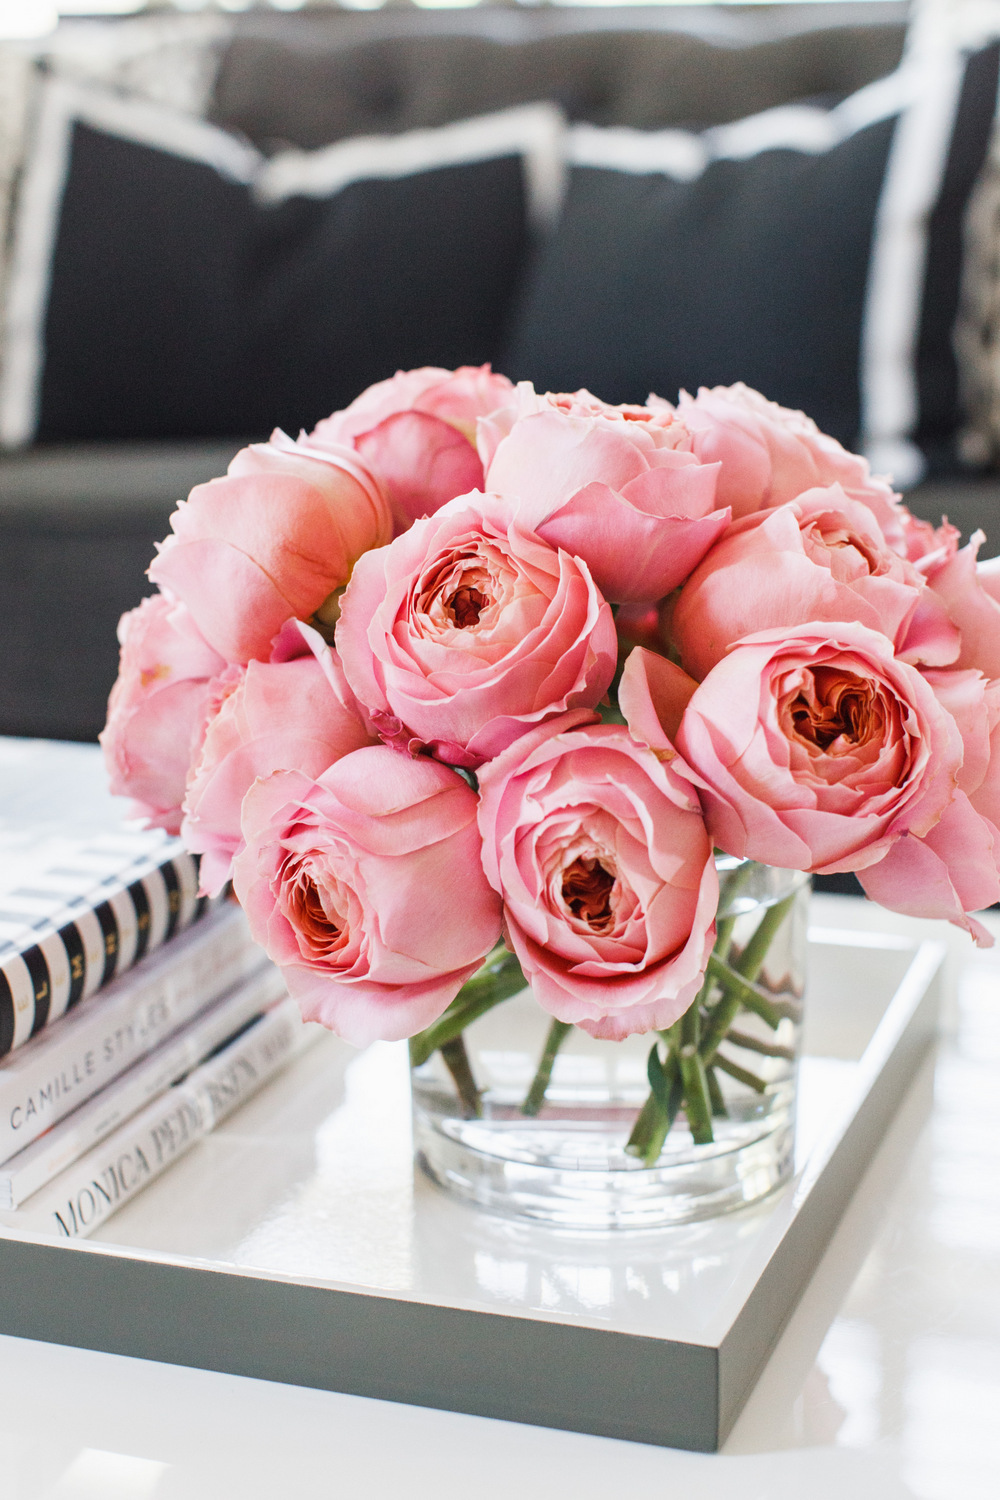 Light Pink Roses Peonies in Vase on Coffee Table